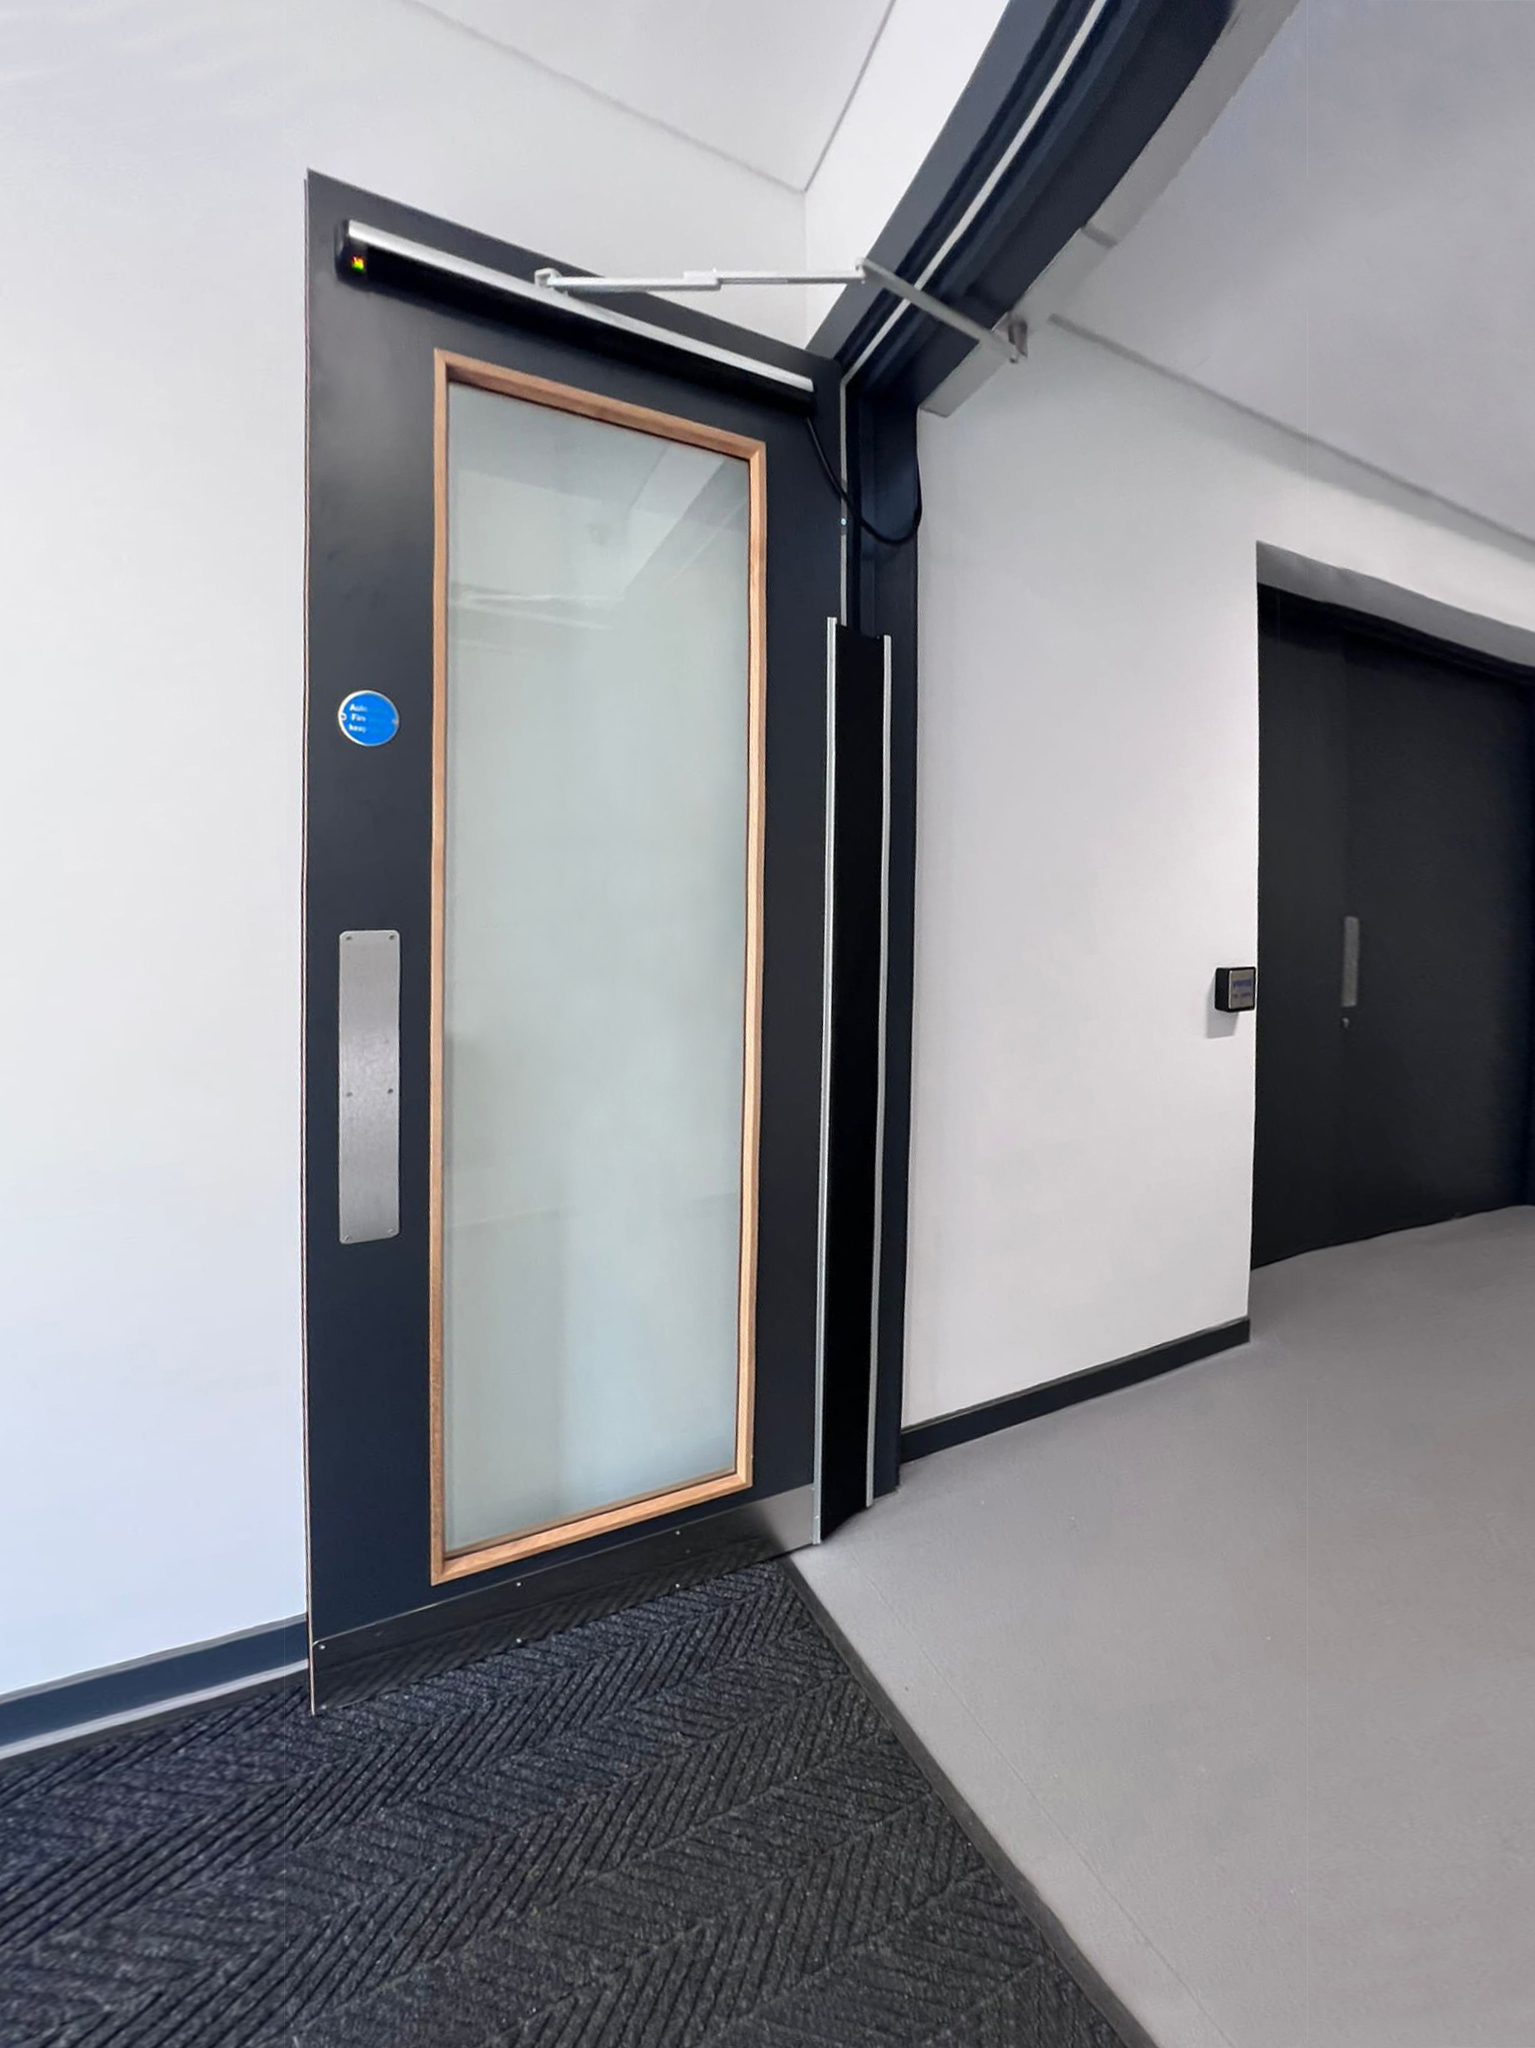 Ahmarra Manufacture Fire Doors for Brunel University London